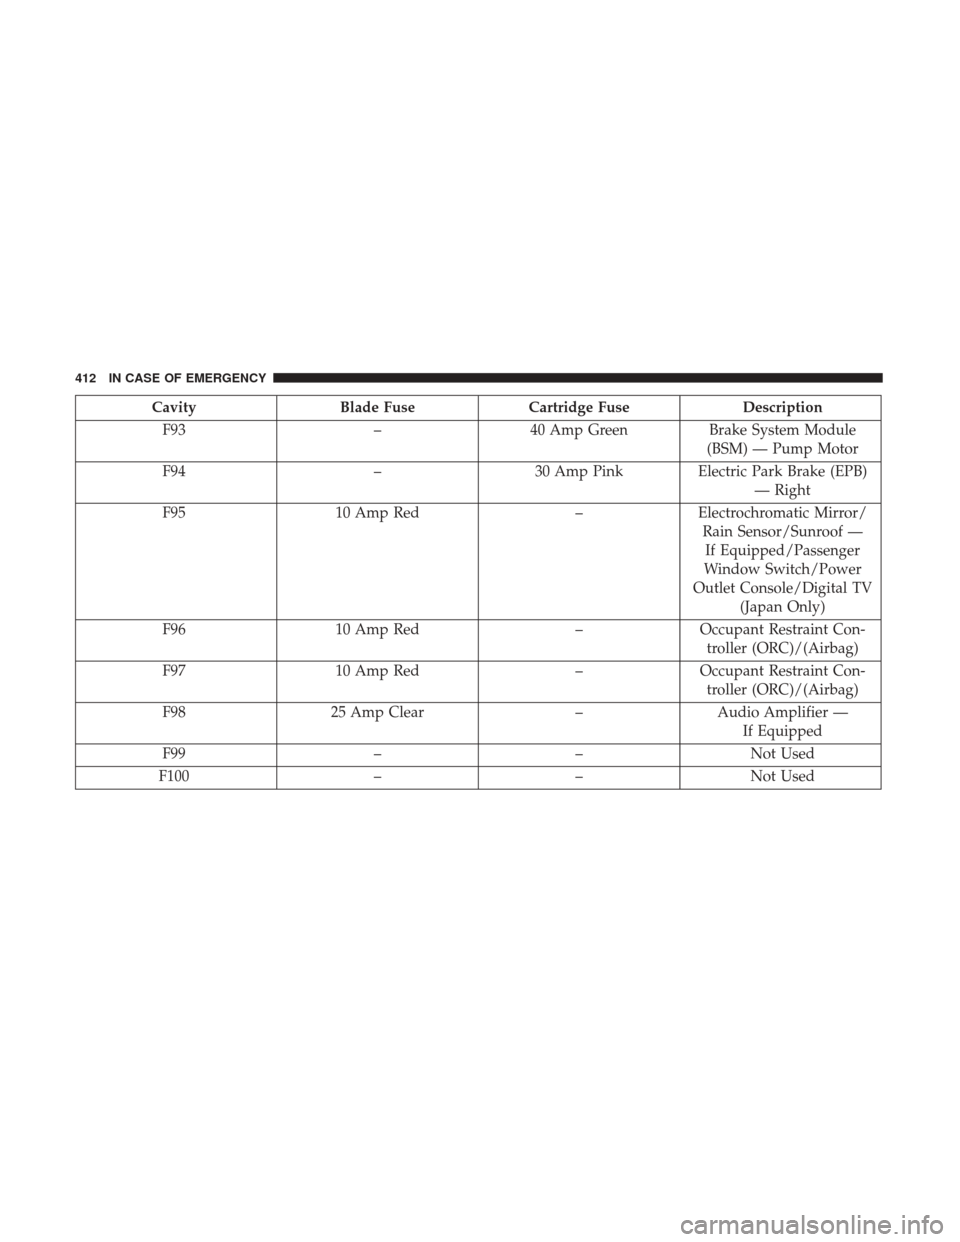 JEEP CHEROKEE 2017 KL / 5.G User Guide CavityBlade Fuse Cartridge Fuse Description
F93 –40 Amp Green Brake System Module
(BSM) — Pump Motor
F94 –30 Amp Pink Electric Park Brake (EPB)
— Right
F95 10 Amp Red –Electrochromatic Mirro